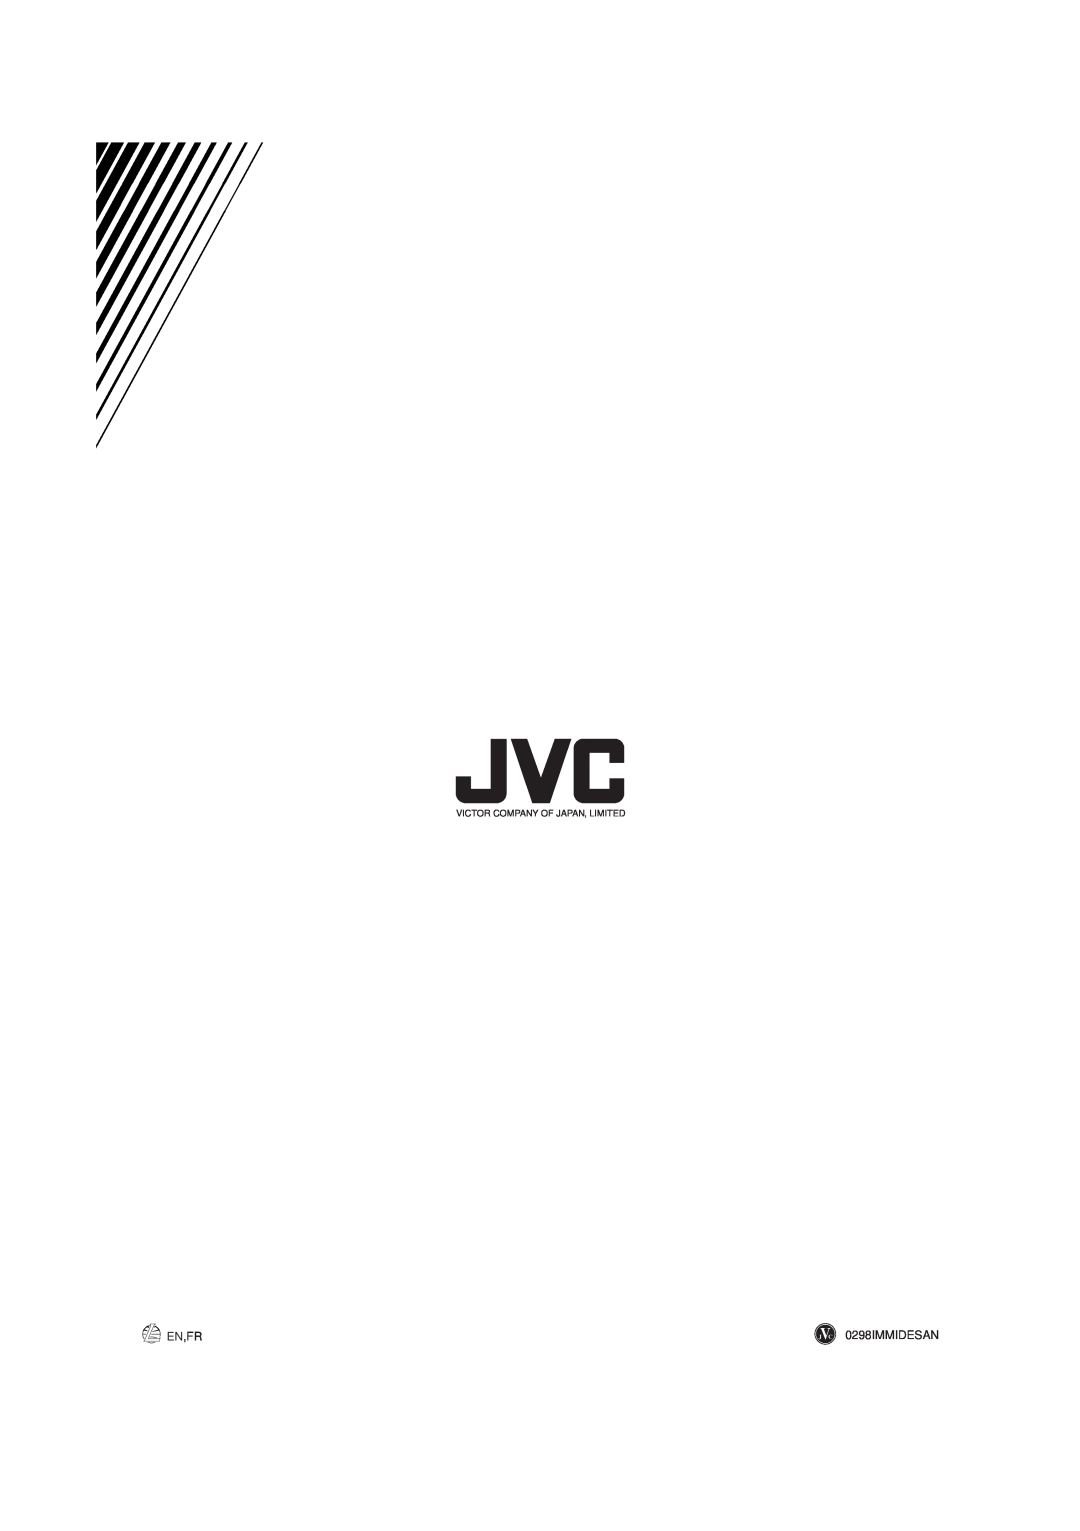 JVC XU-301 manual En,Fr, JVC 0298IMMIDESAN, Victor Company Of Japan, Limited 